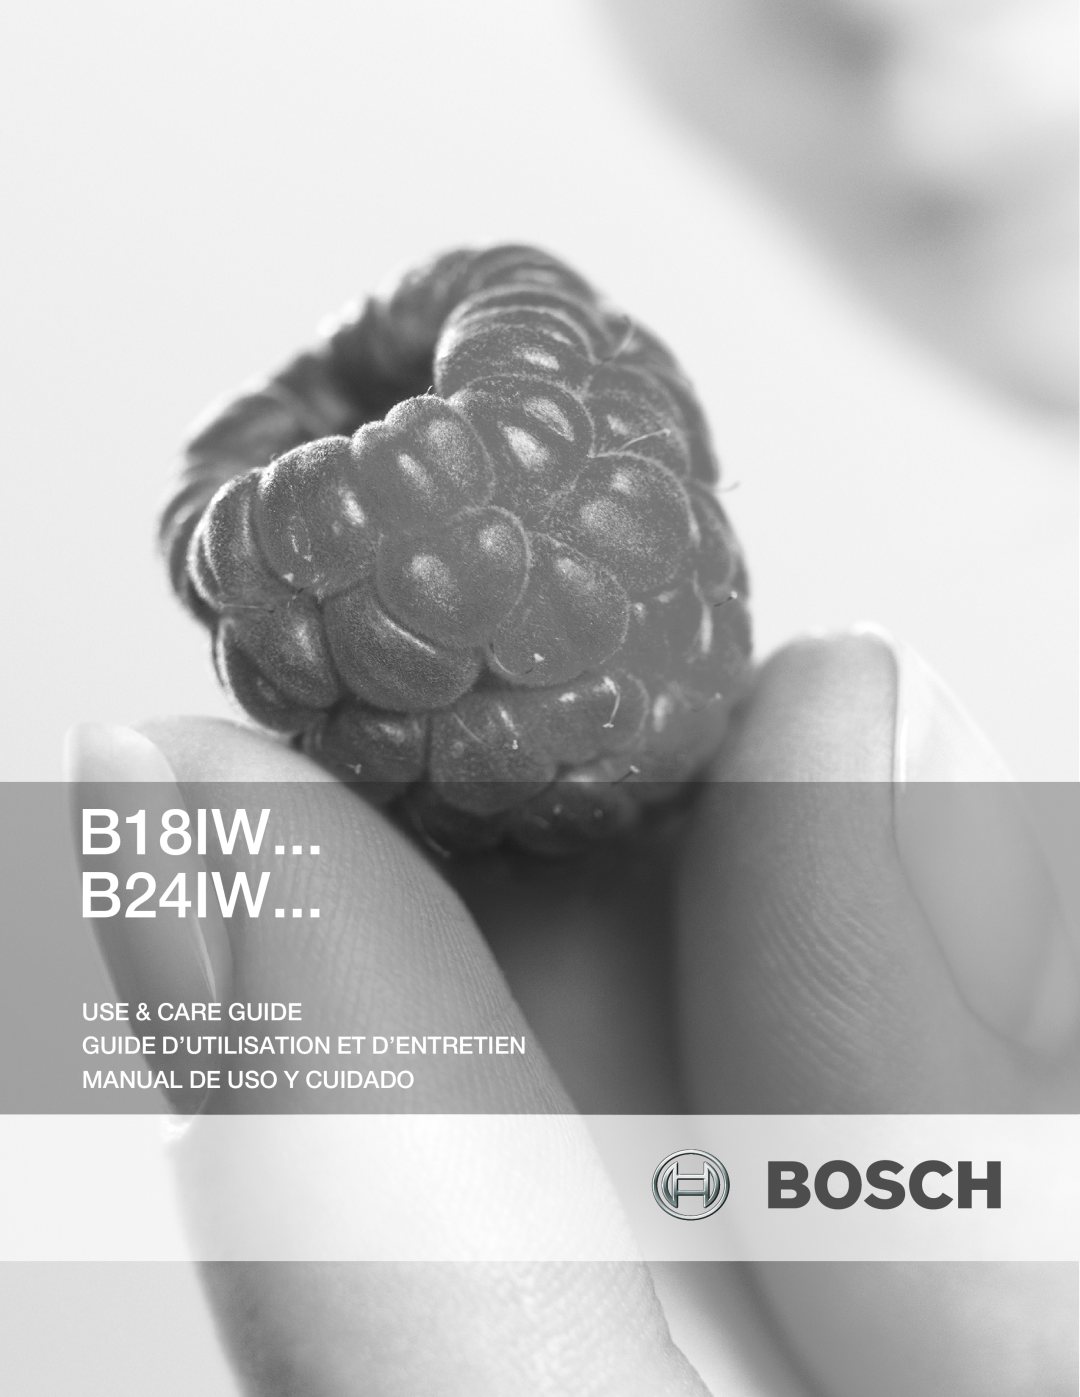 Bosch Appliances manual B18IW B24IW, Use & Care Guide 